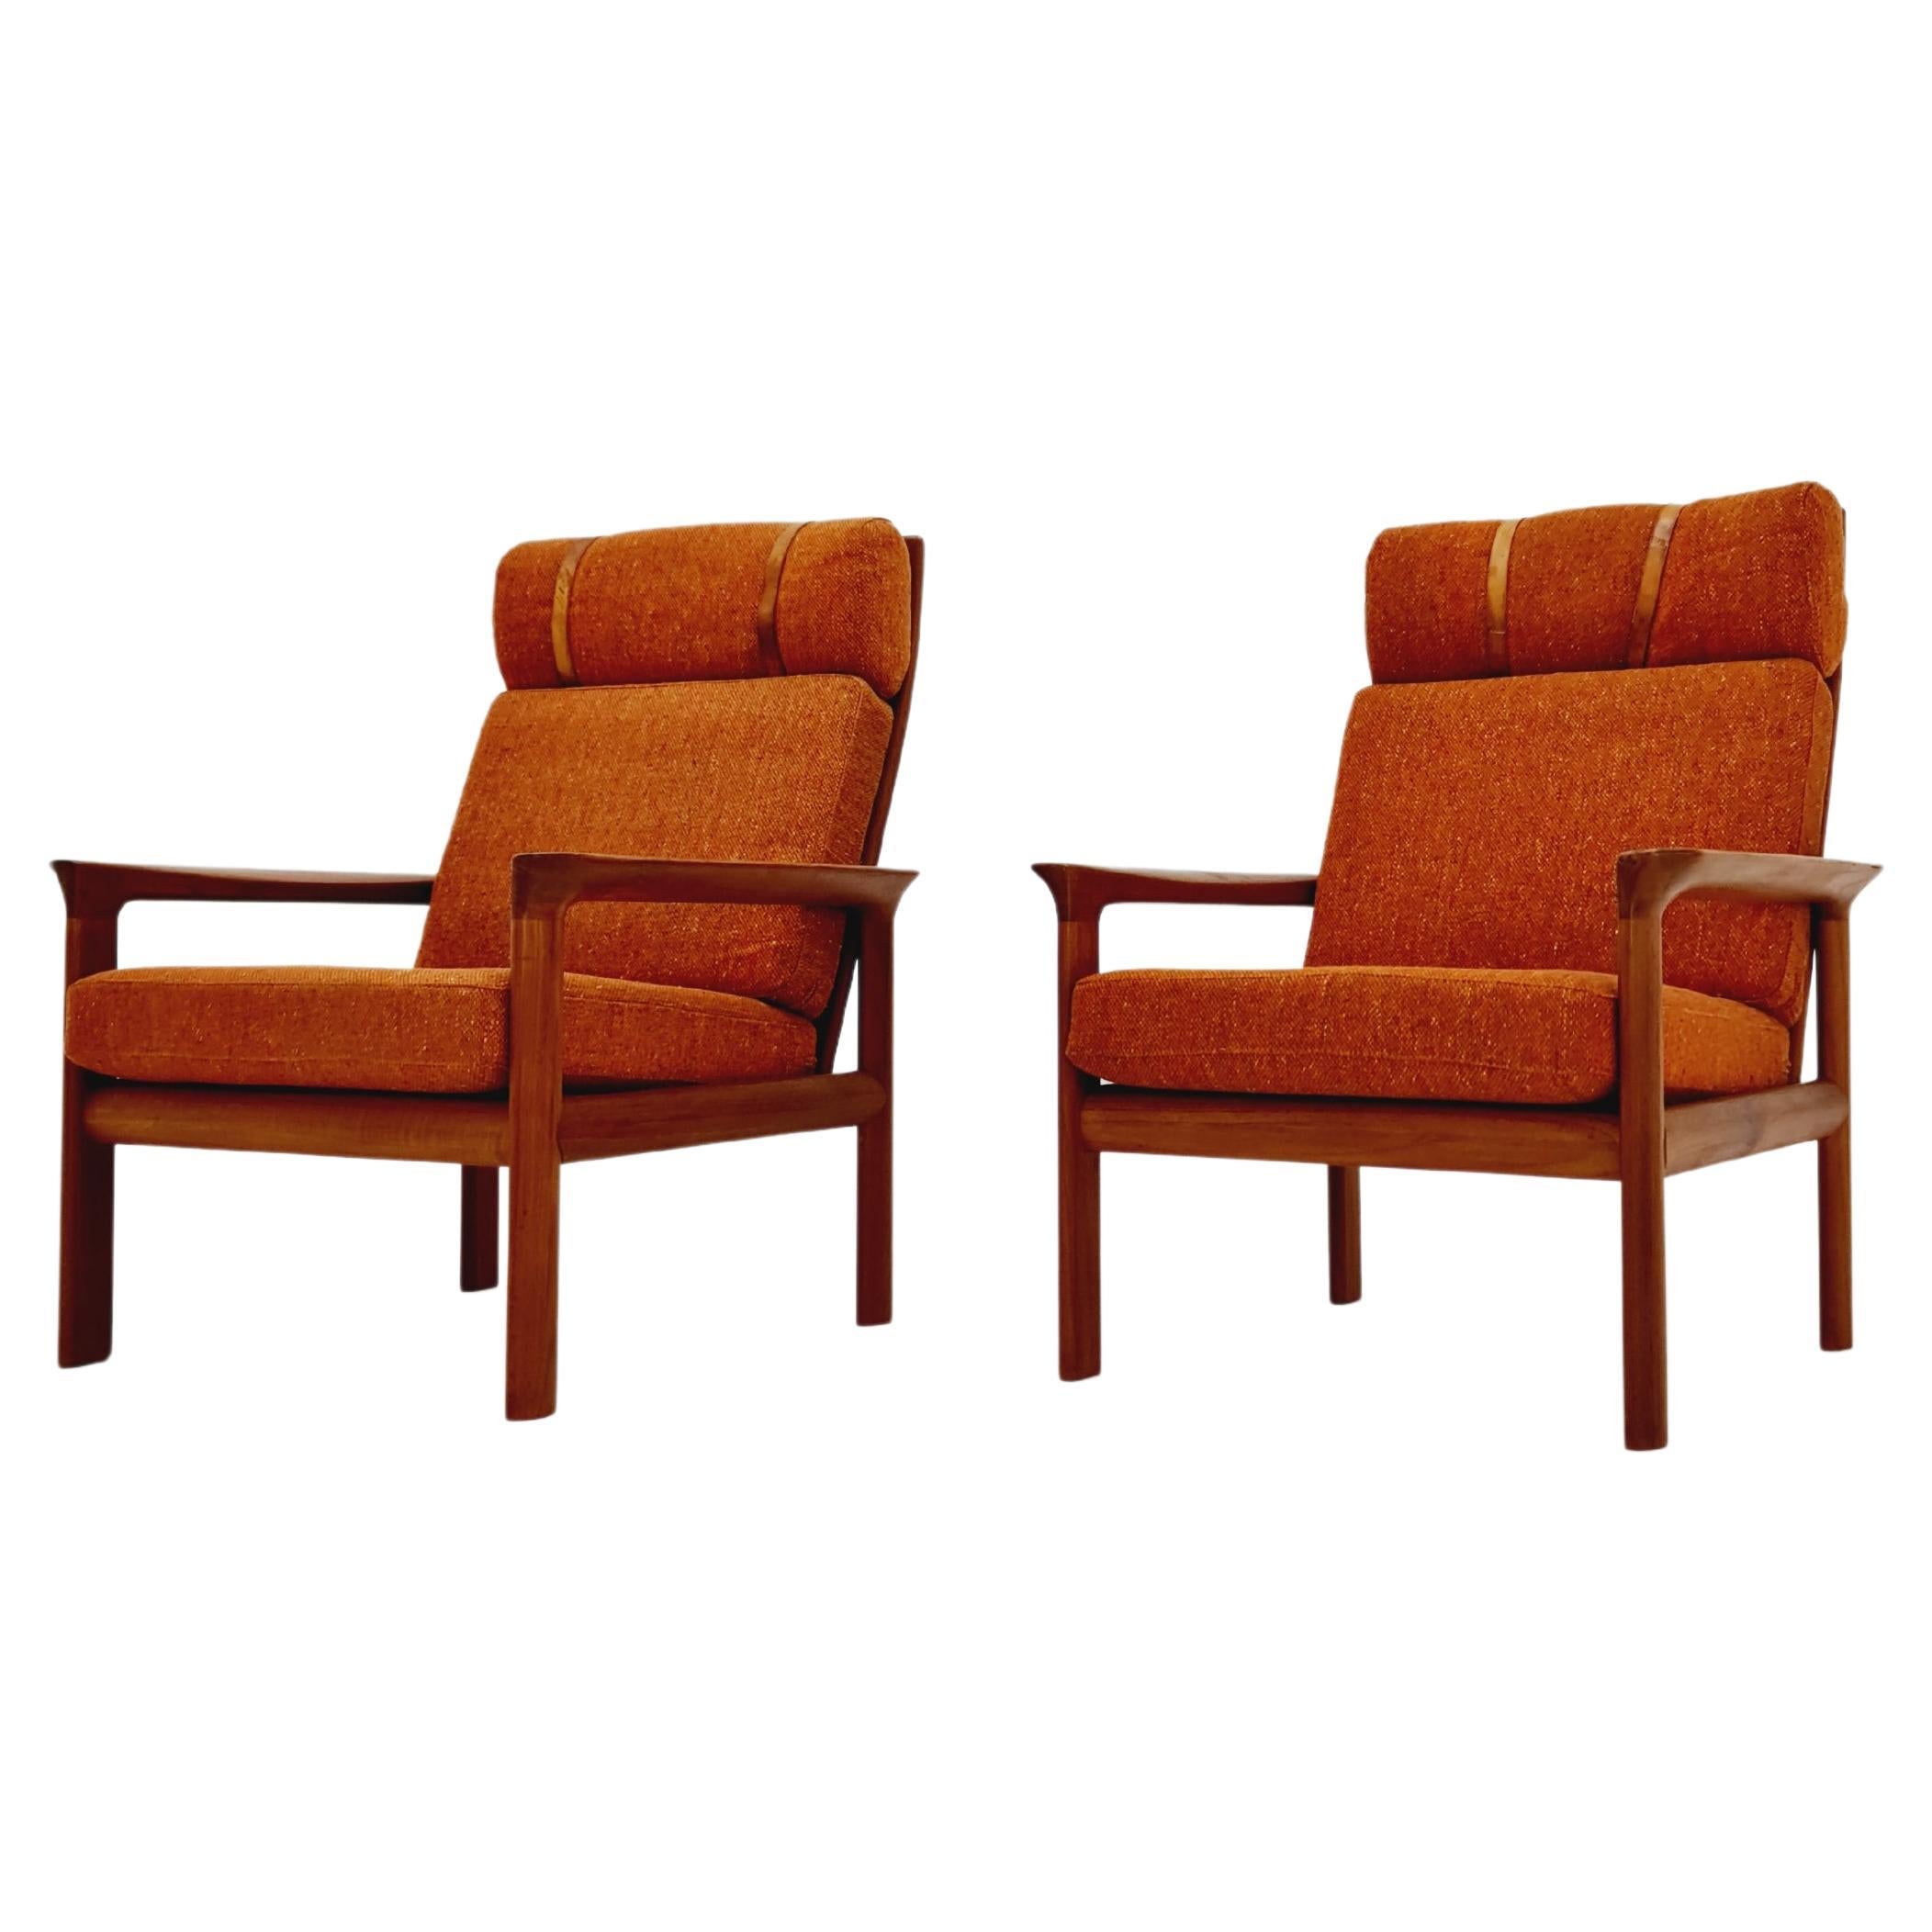 Mid century teak easy lounge high back chairs by Sven Ellekaer for Komfort  For Sale